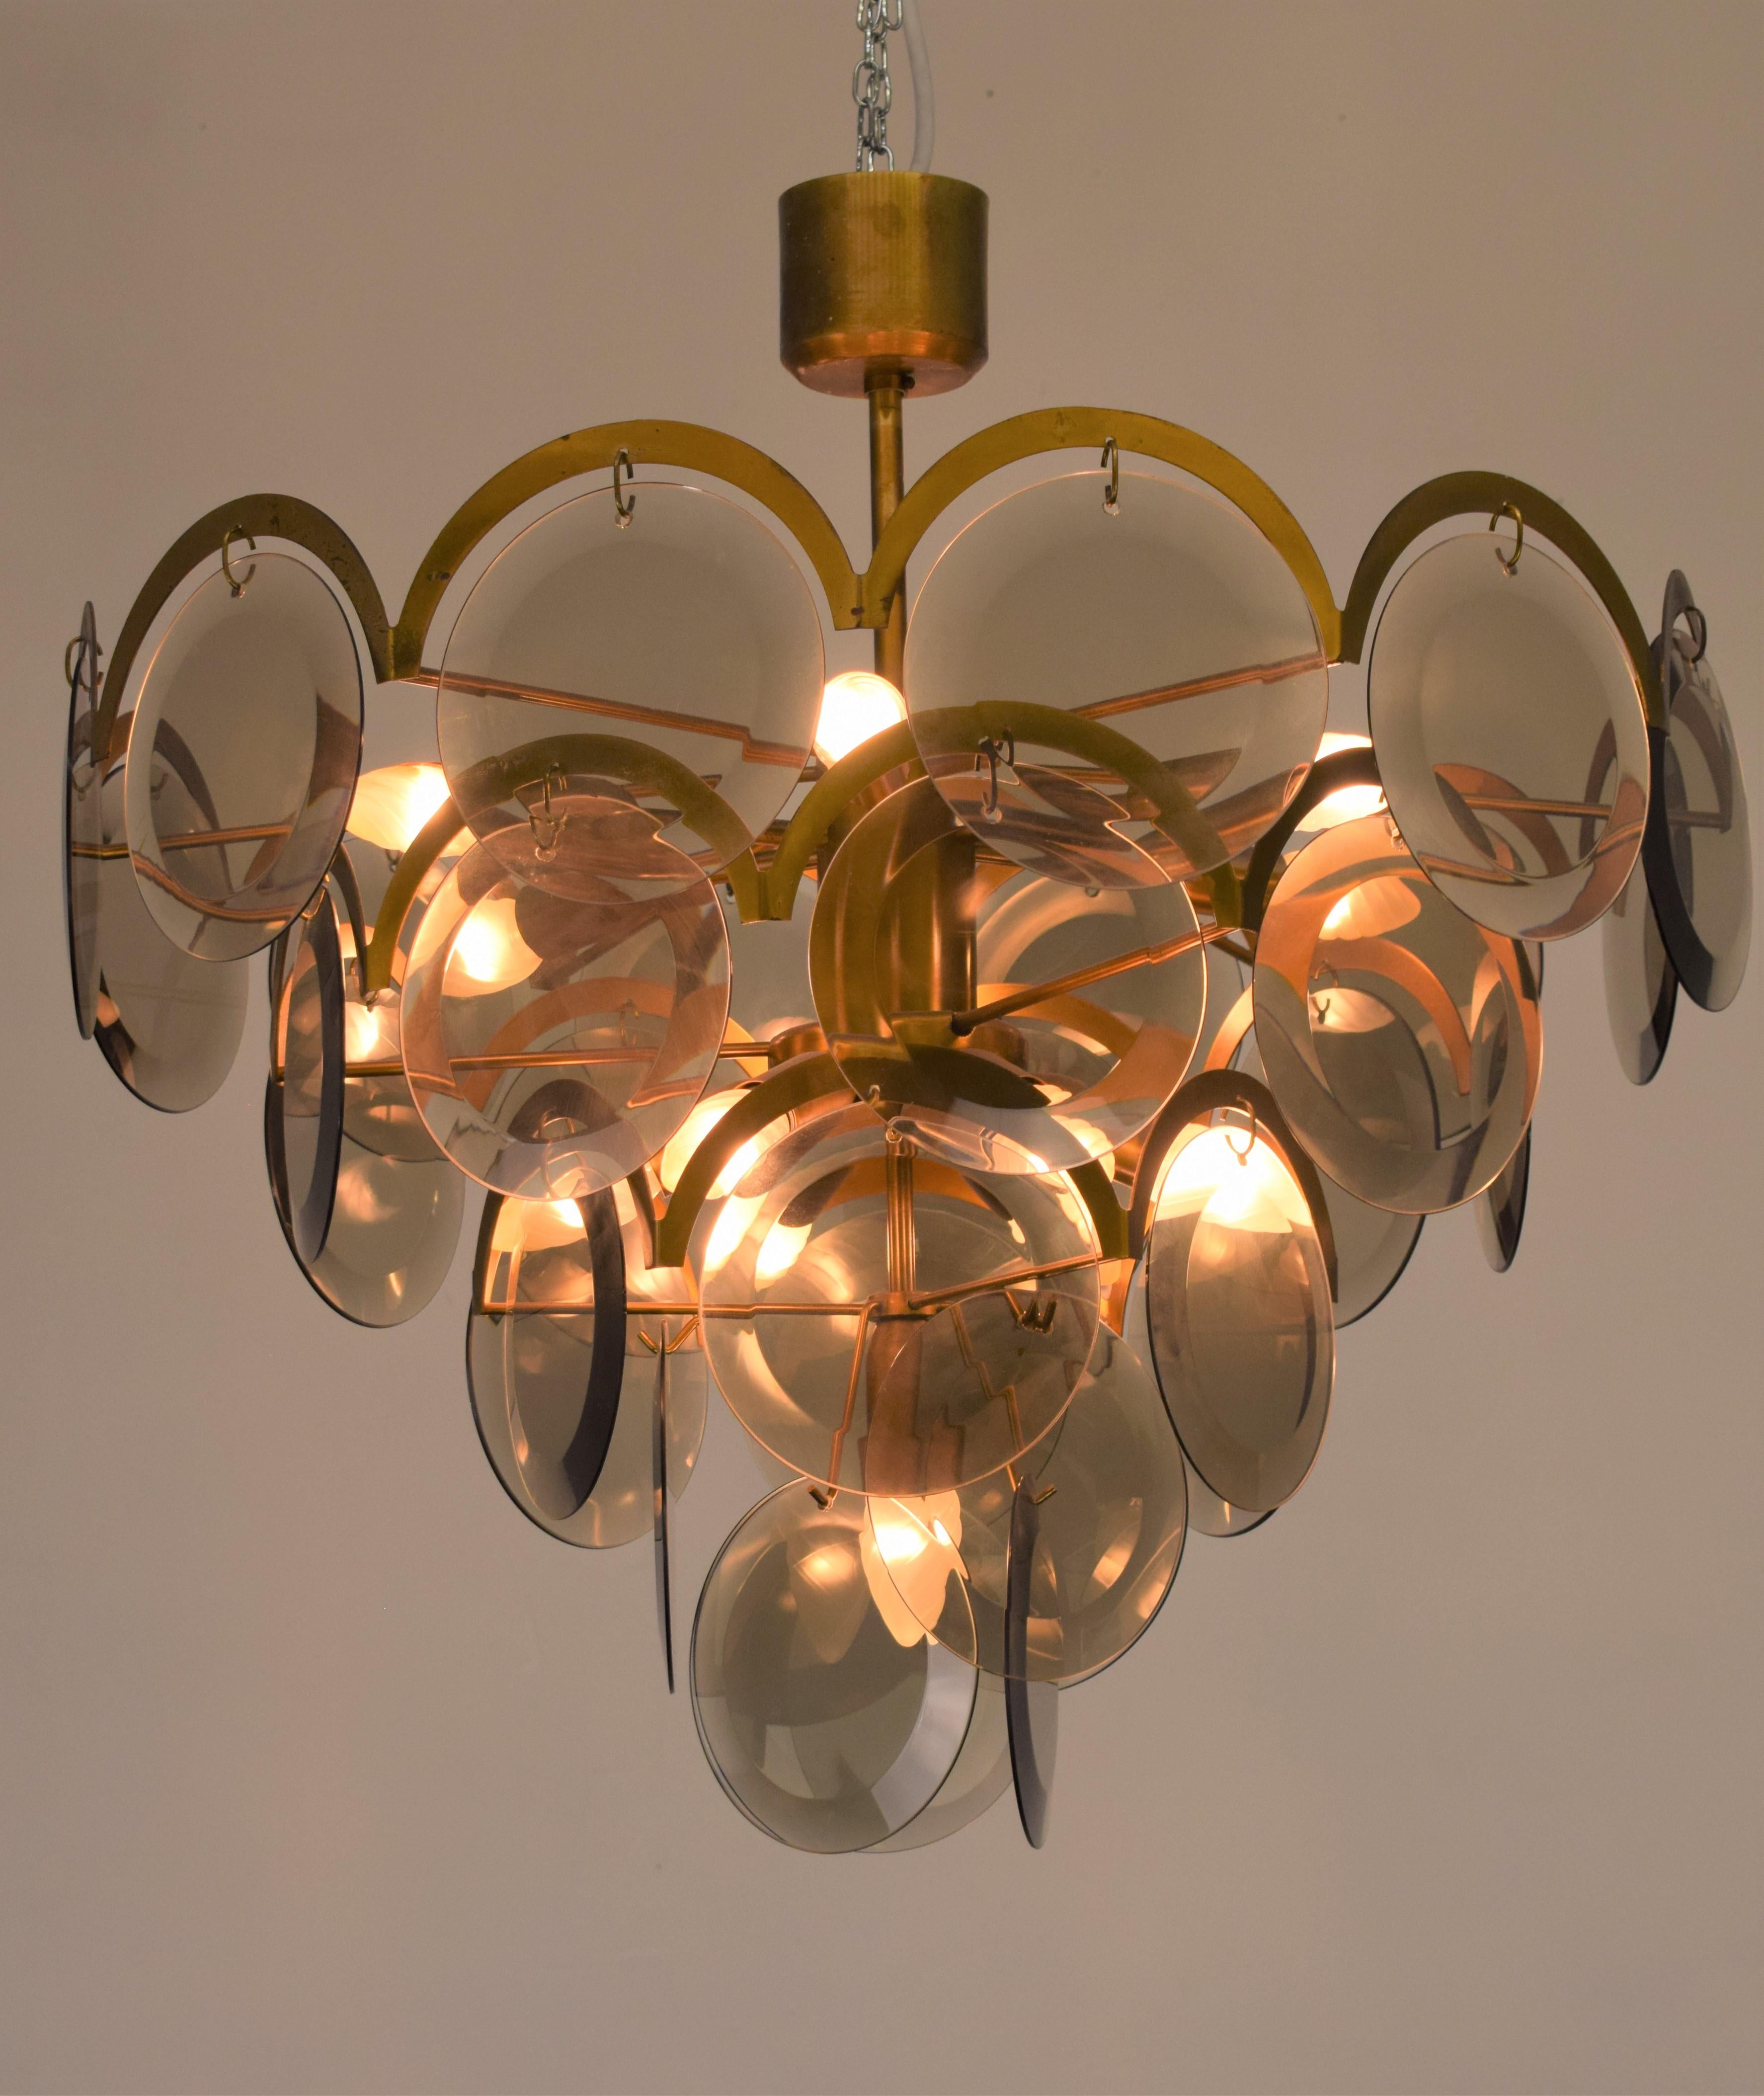 Italian chandelier by Gino Vistosi, 1960s.

Dimensions: H= 65 cm; D= 65 cm.